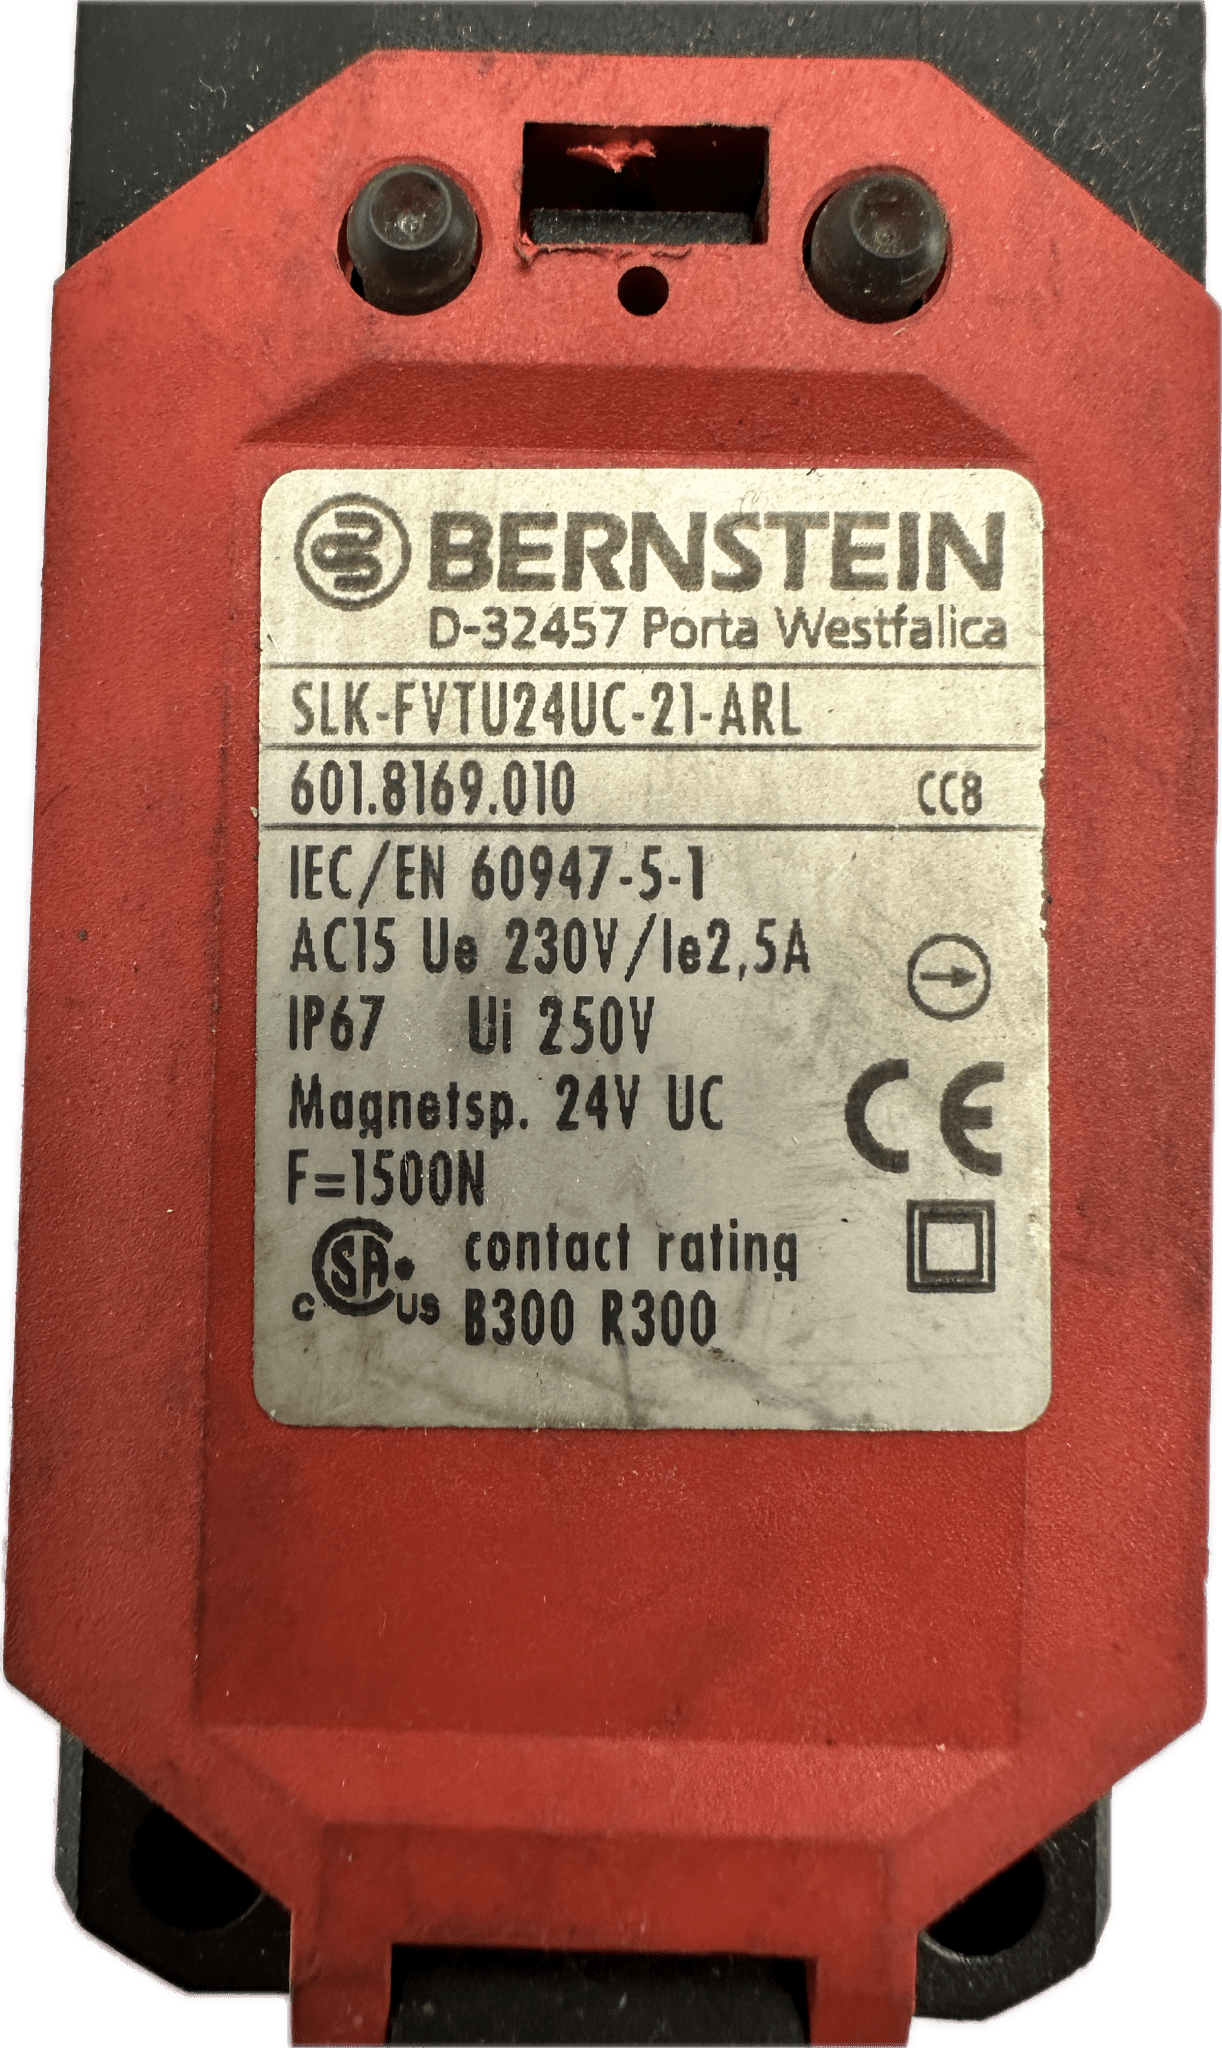 Bernstein SLK-FVTU24UC-21-ARLX 611.8169.073 - #product_category# | Klenk Maschinenhandel